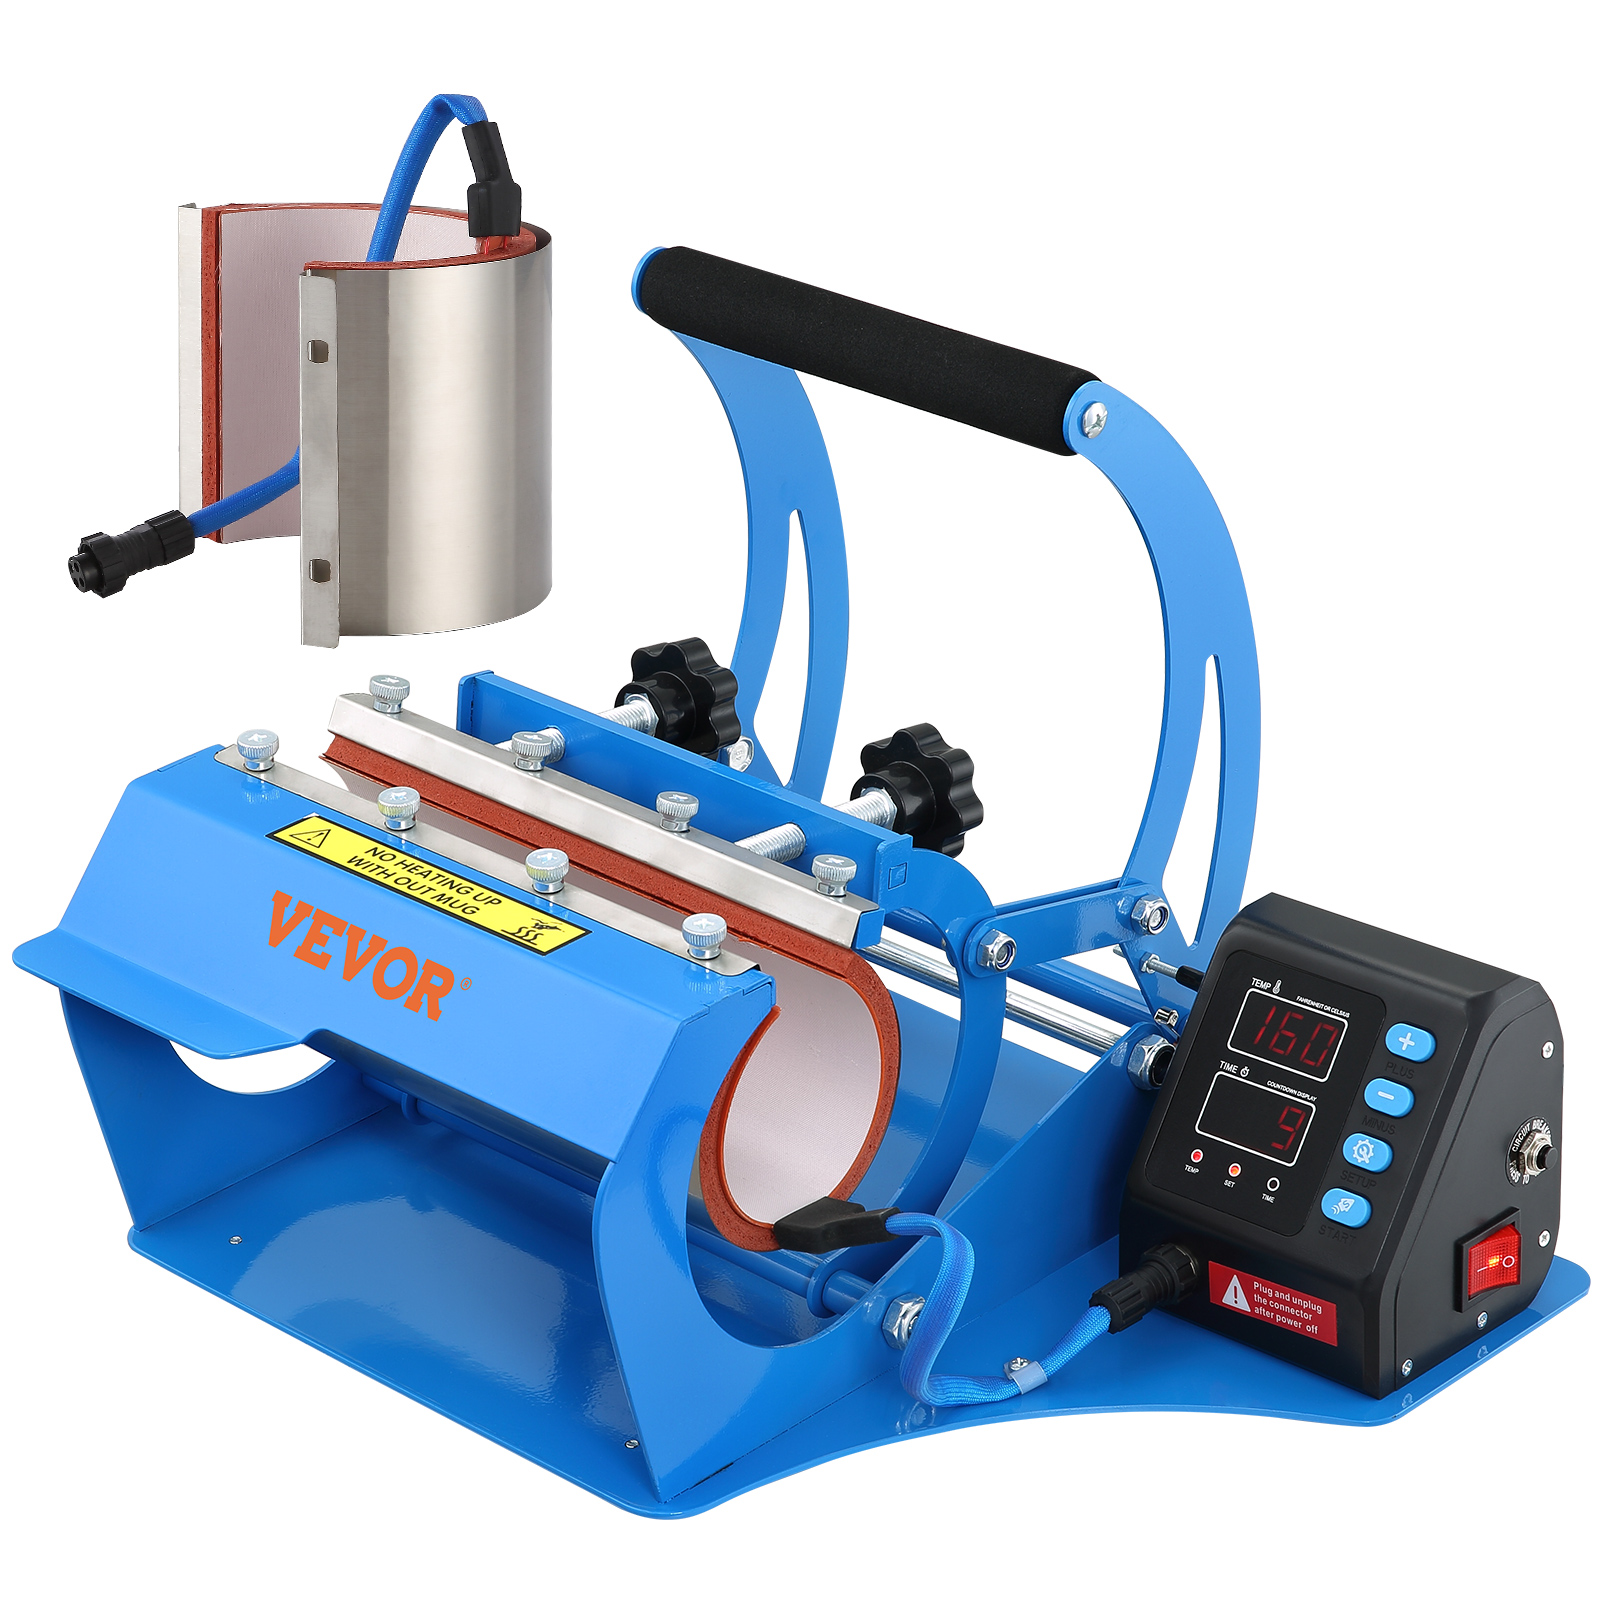 I-TRANSFER Mug Heat Press 30oz LED Digital controller DIY Sublimation Press  Machine with Detachable Transfer Sublimation Mats - AliExpress